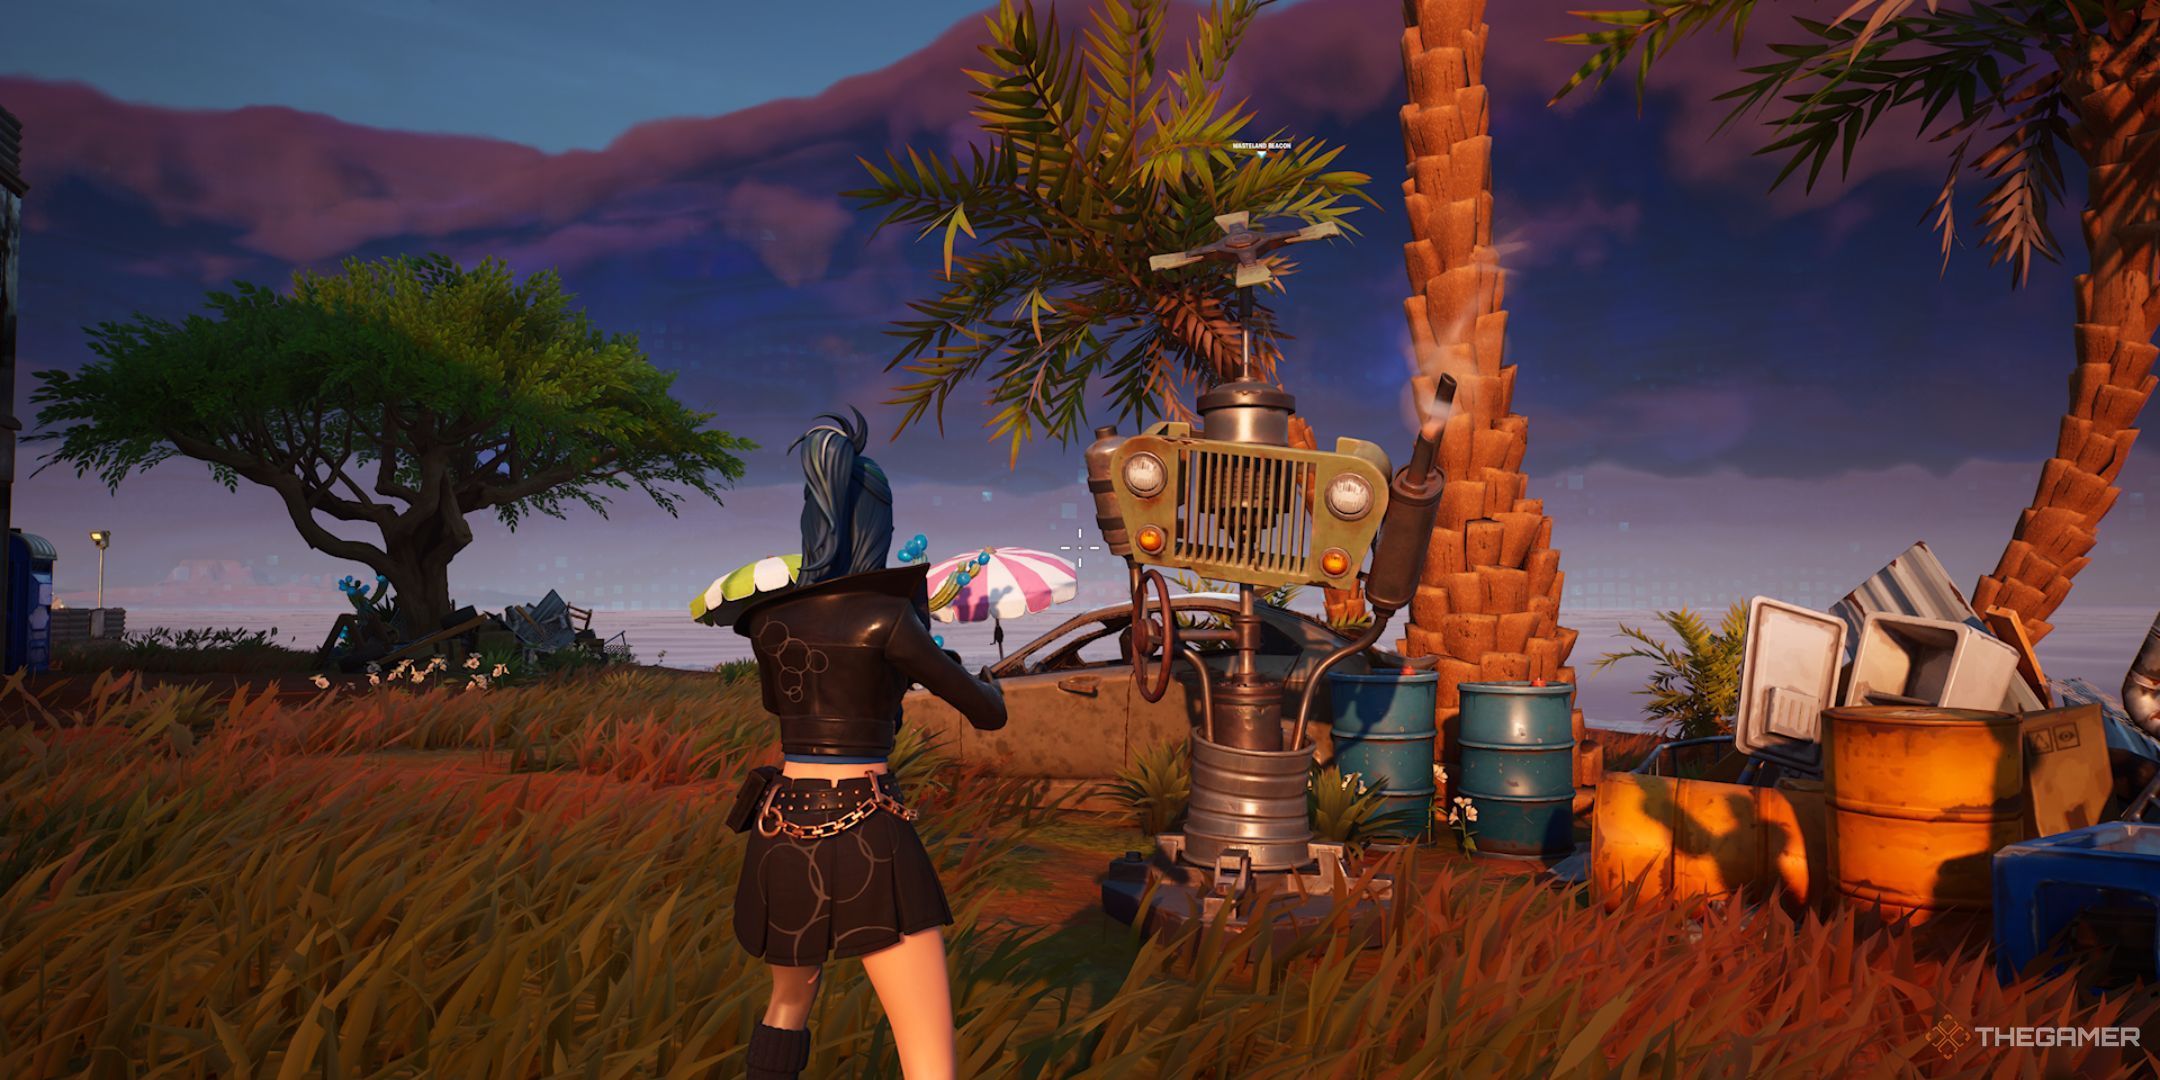 A player standing near the Wastelander Beacon found near Brite Raider's hideout in Fortnite.